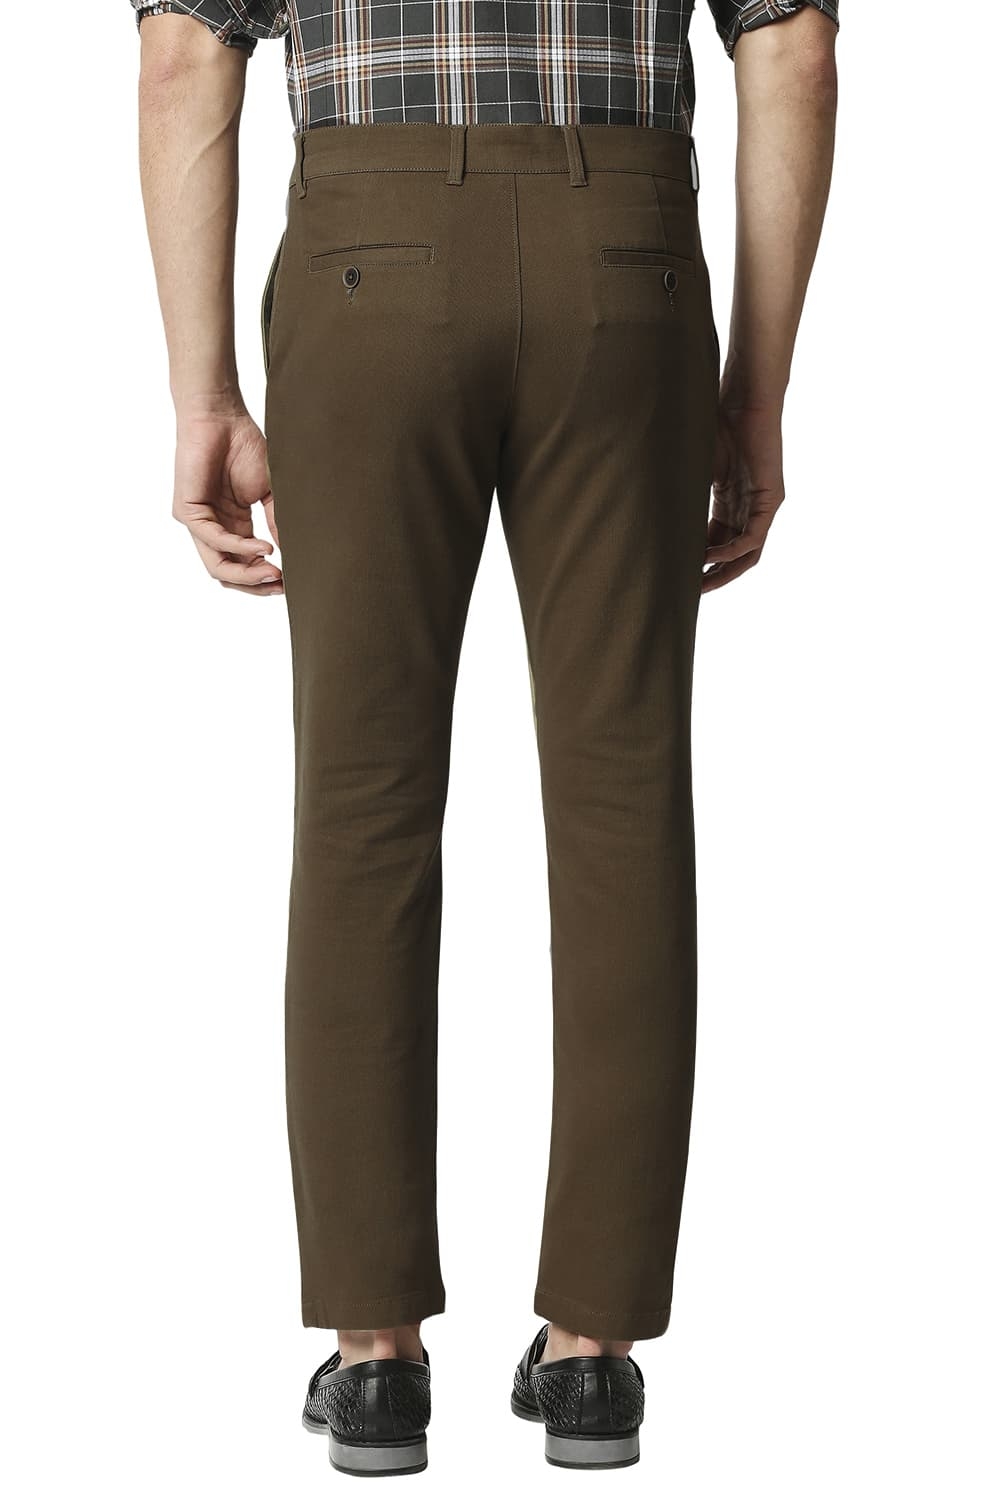 Basics | Men's Dark Brown Cotton Blend Solid Trouser 1